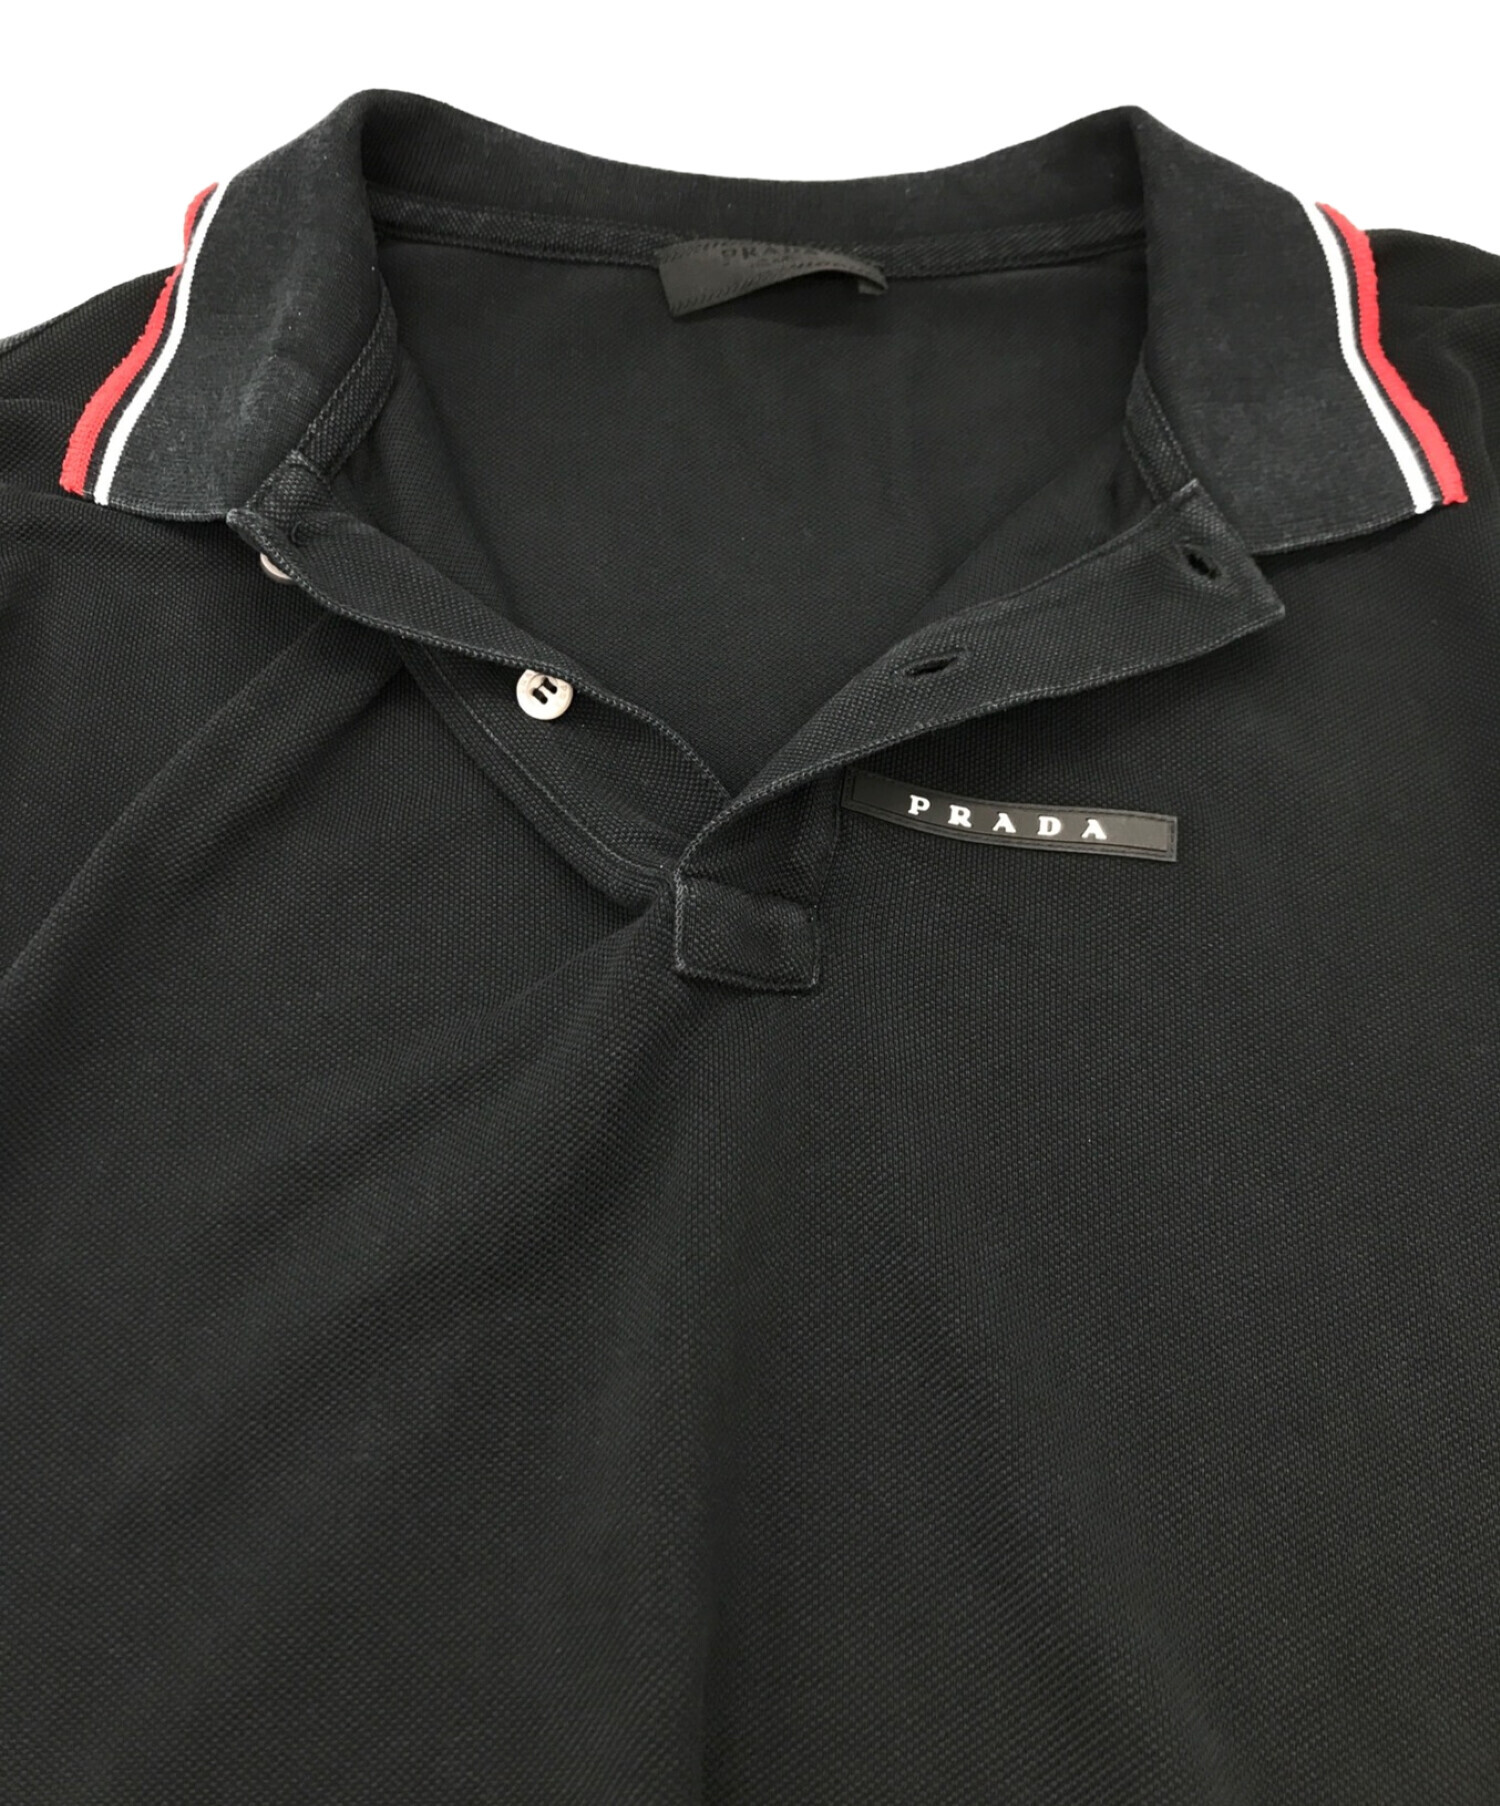 PRADA (プラダ) ポロシャツ ロゴポロシャツ ロゴプレート ブラック×レッド サイズ:XL